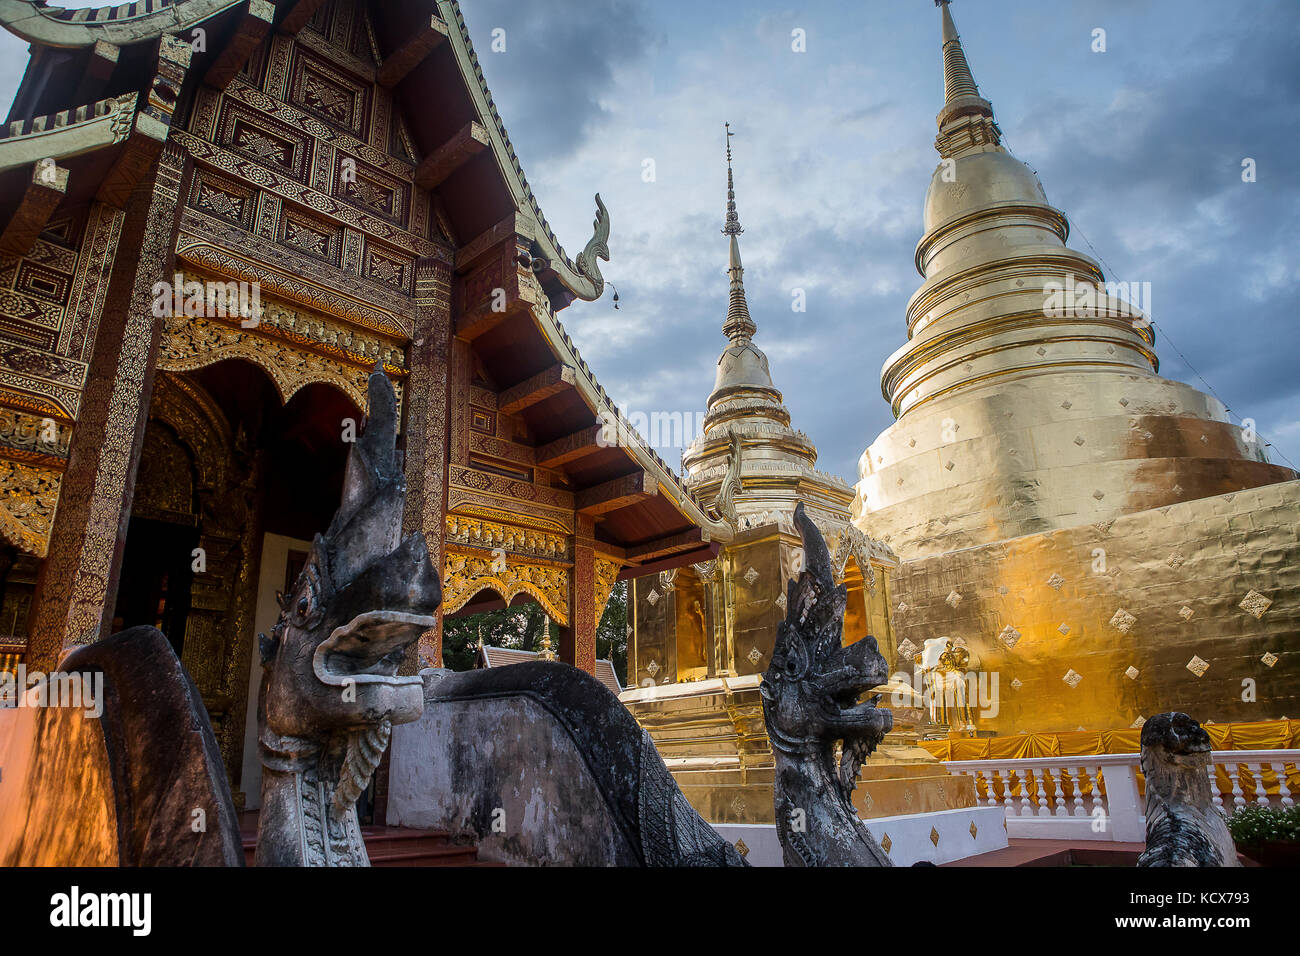 Wat Phra Singh temple, Chiang Mai, Thailand Stock Photo